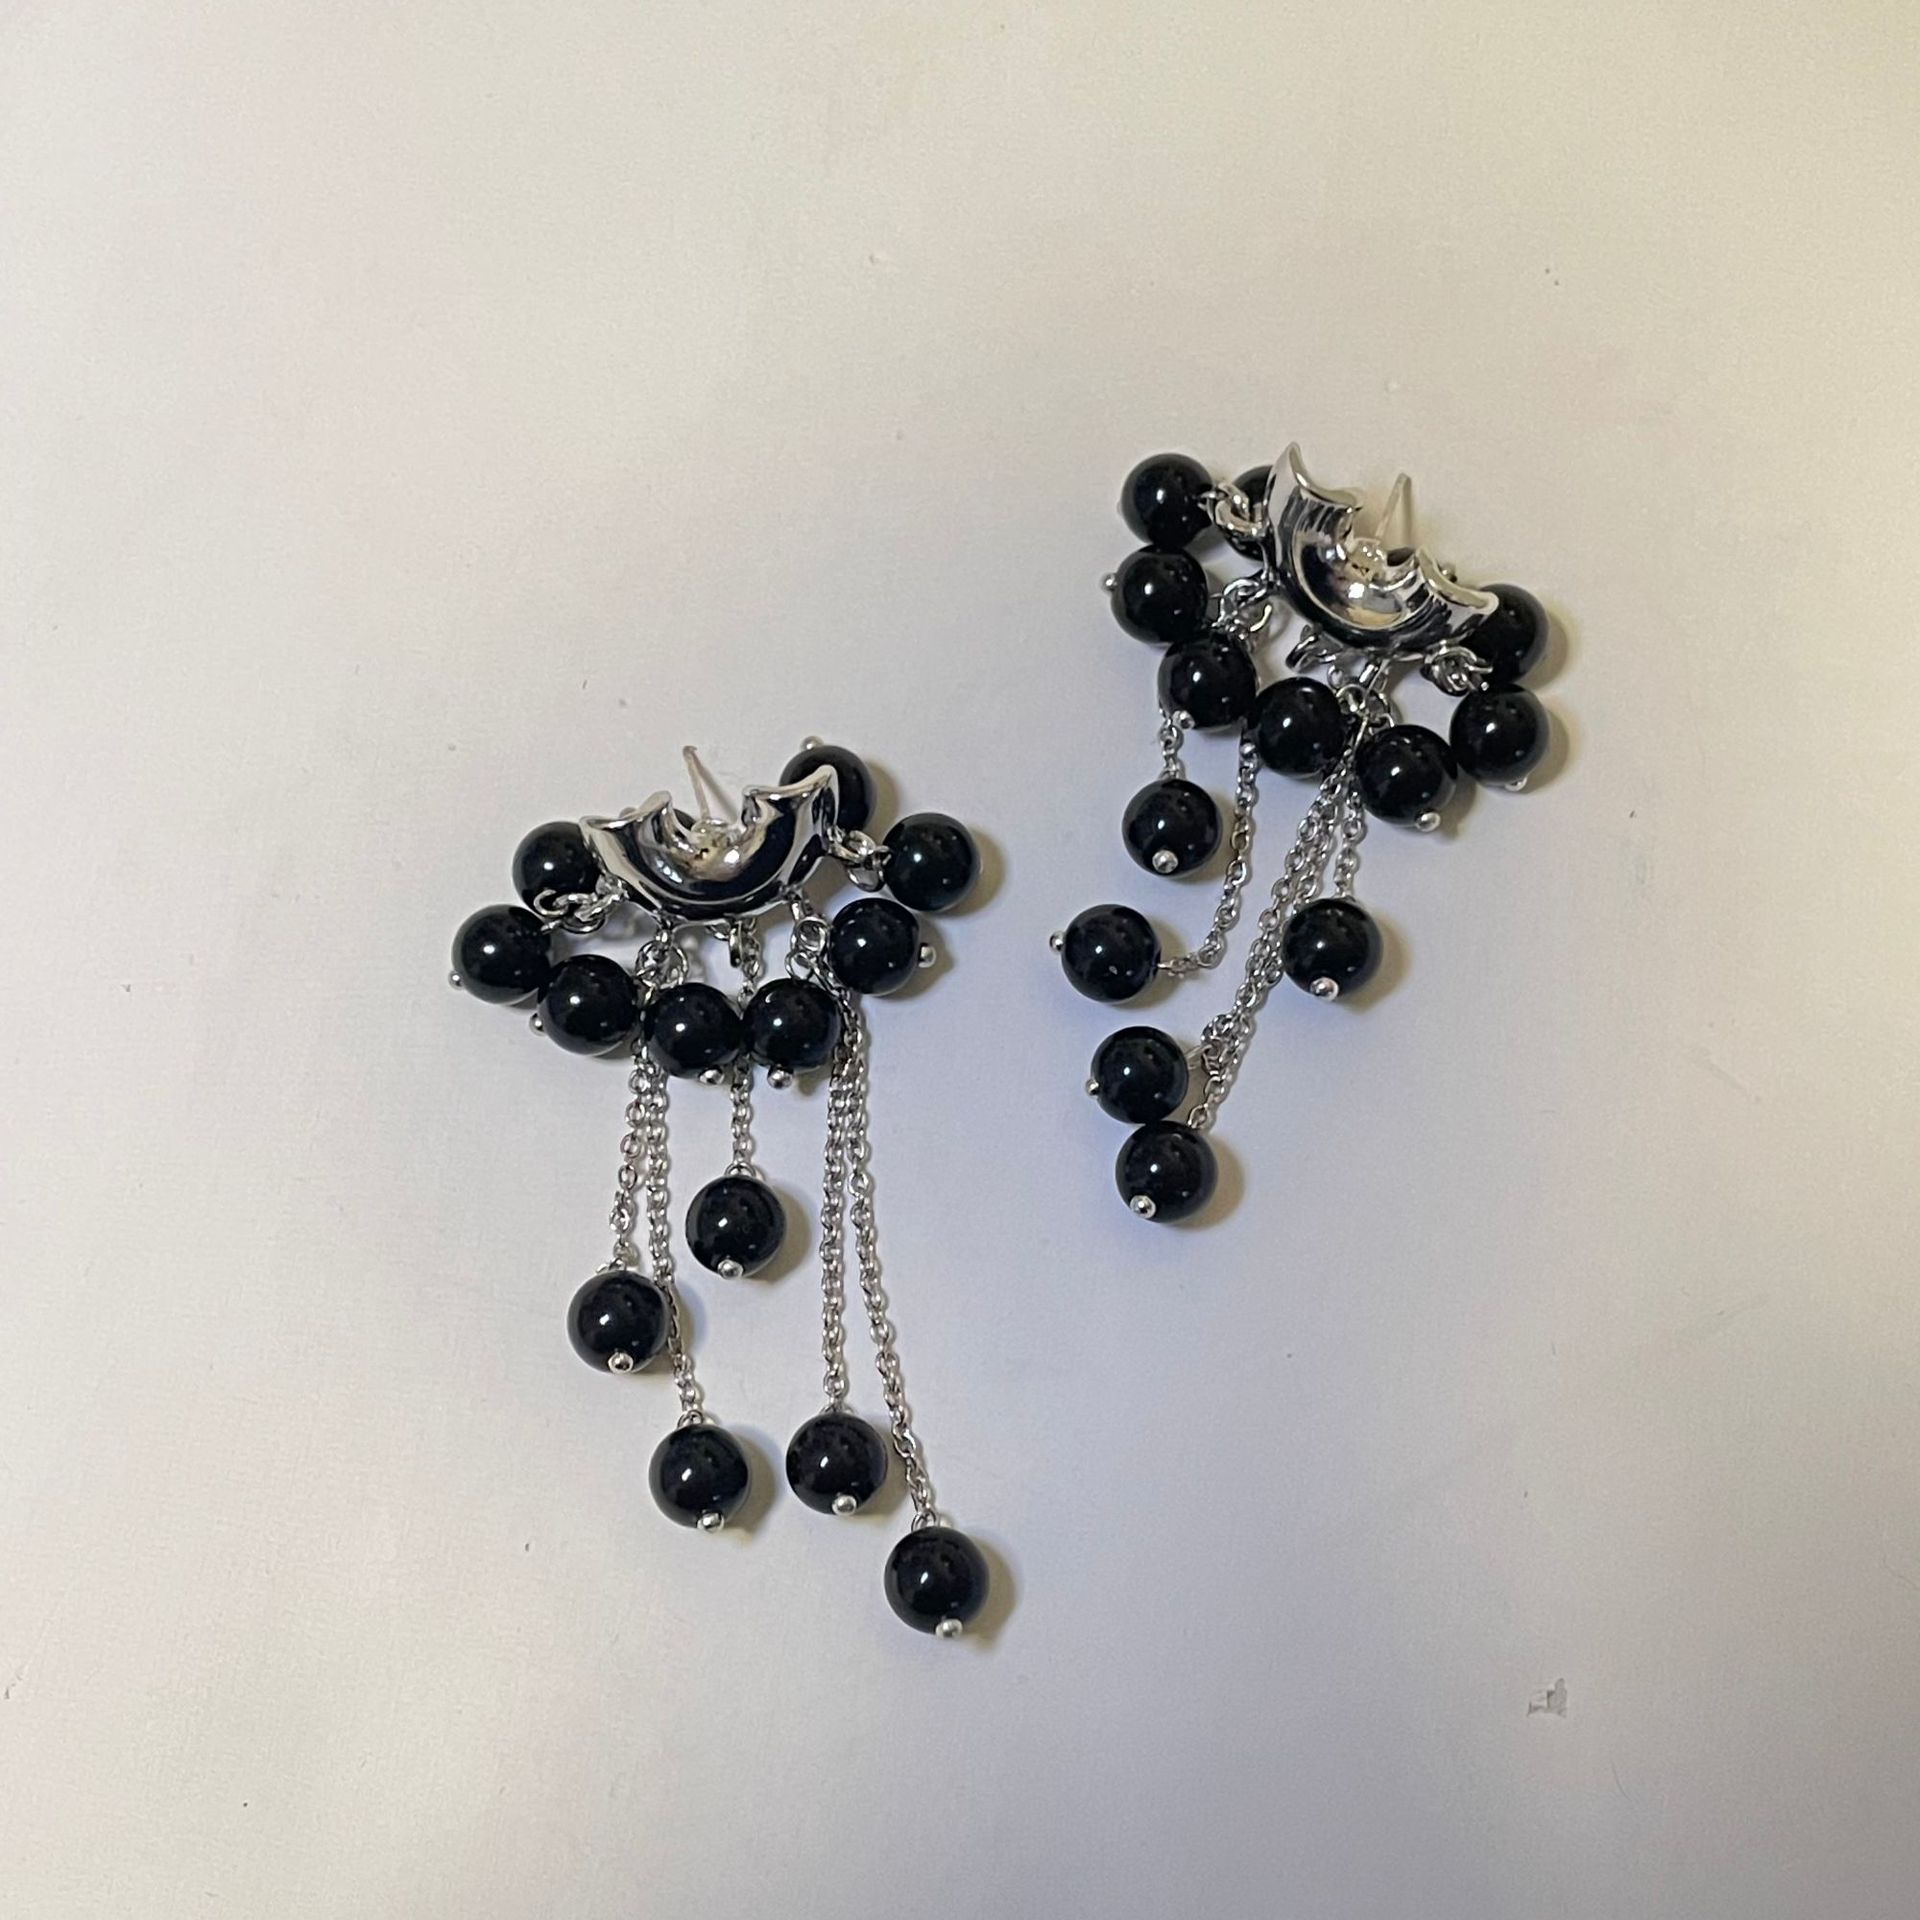 Short black beads